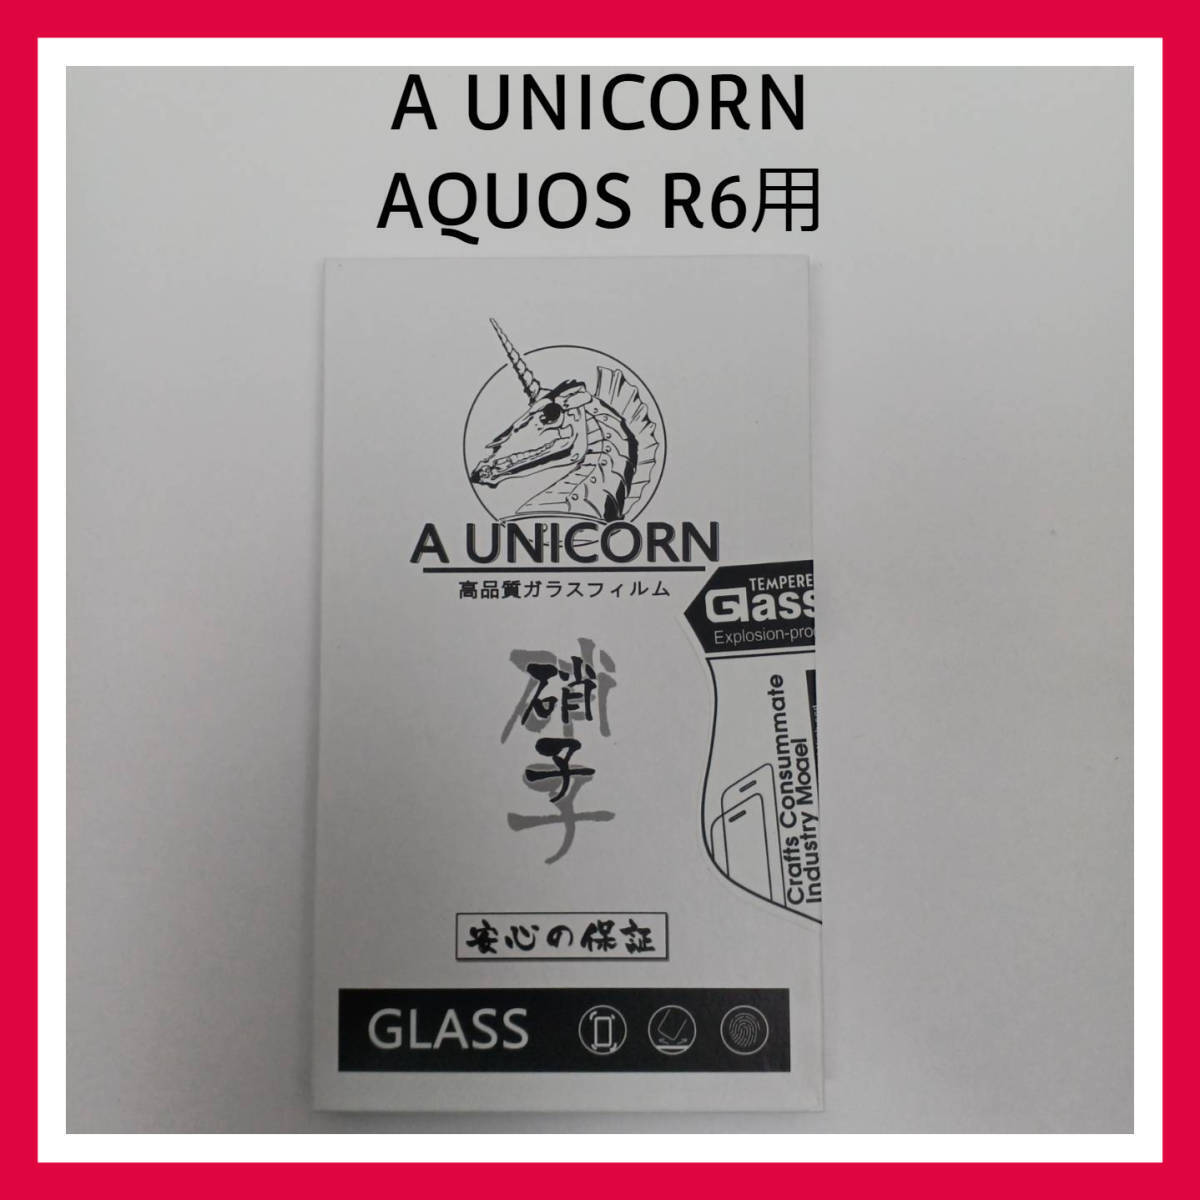 A UNICORN AQUOS R6 高品質 ガラスフィルムの画像1